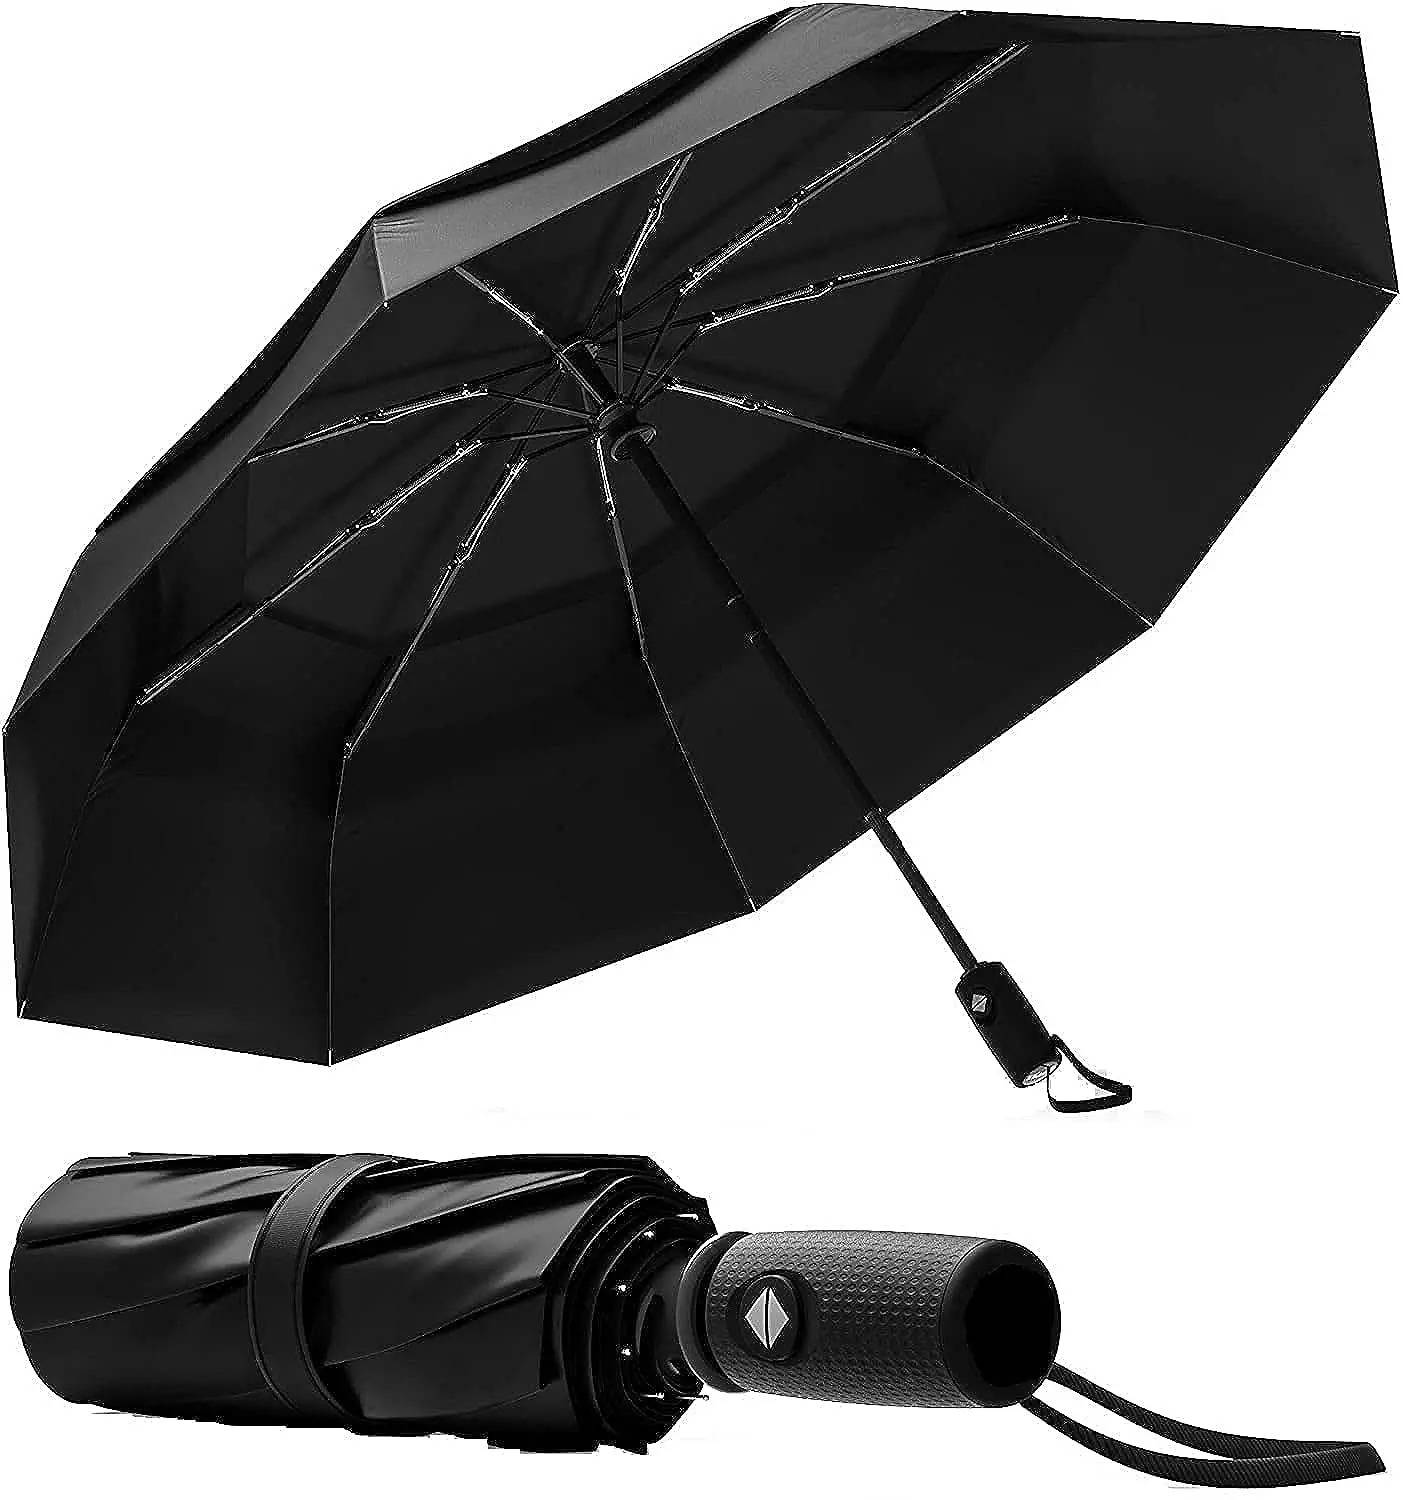 TECKNET Large Windproof Umbrella for Rain, Wind Resistant Compact Trav